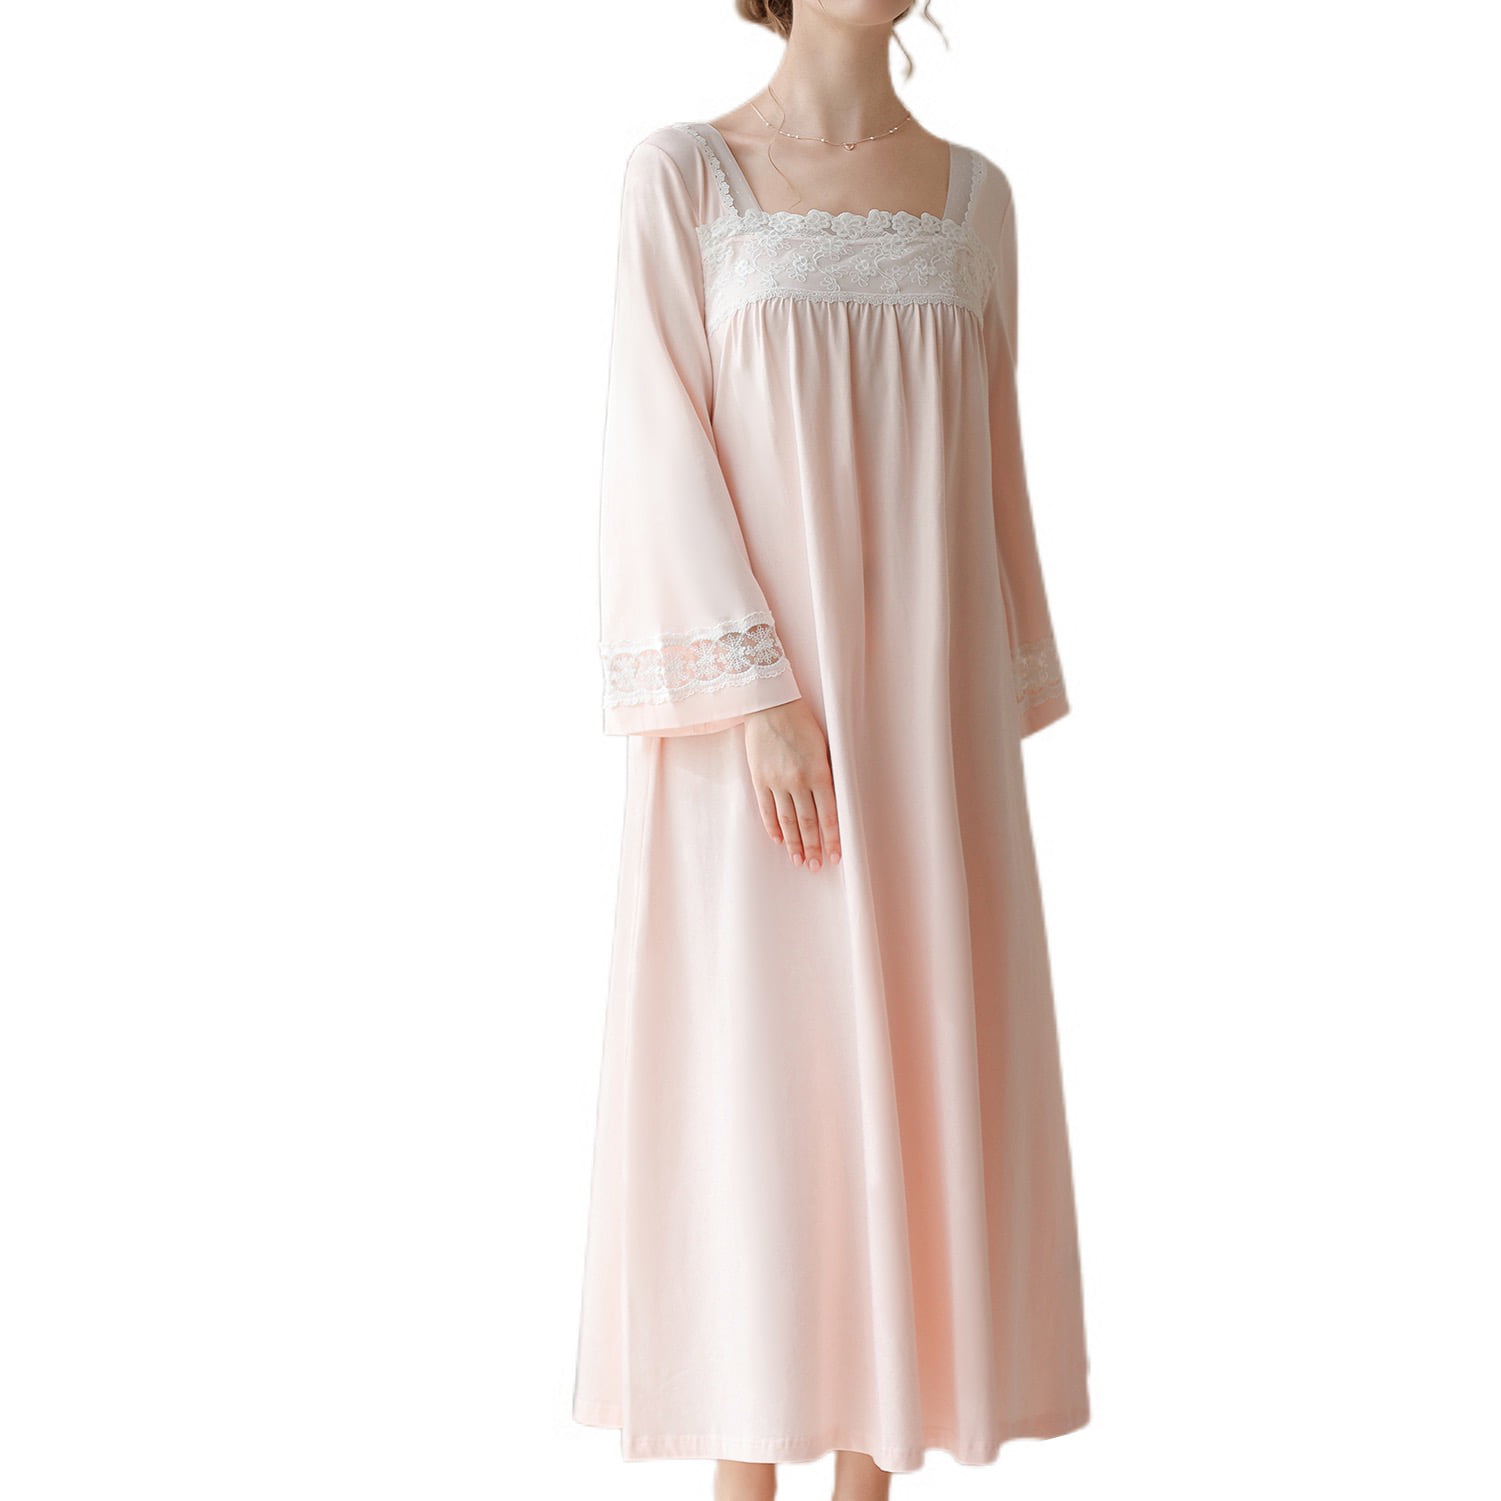 Homgro Women's Cotton Sleep Shirt Cute Lace Victorian Nightgown